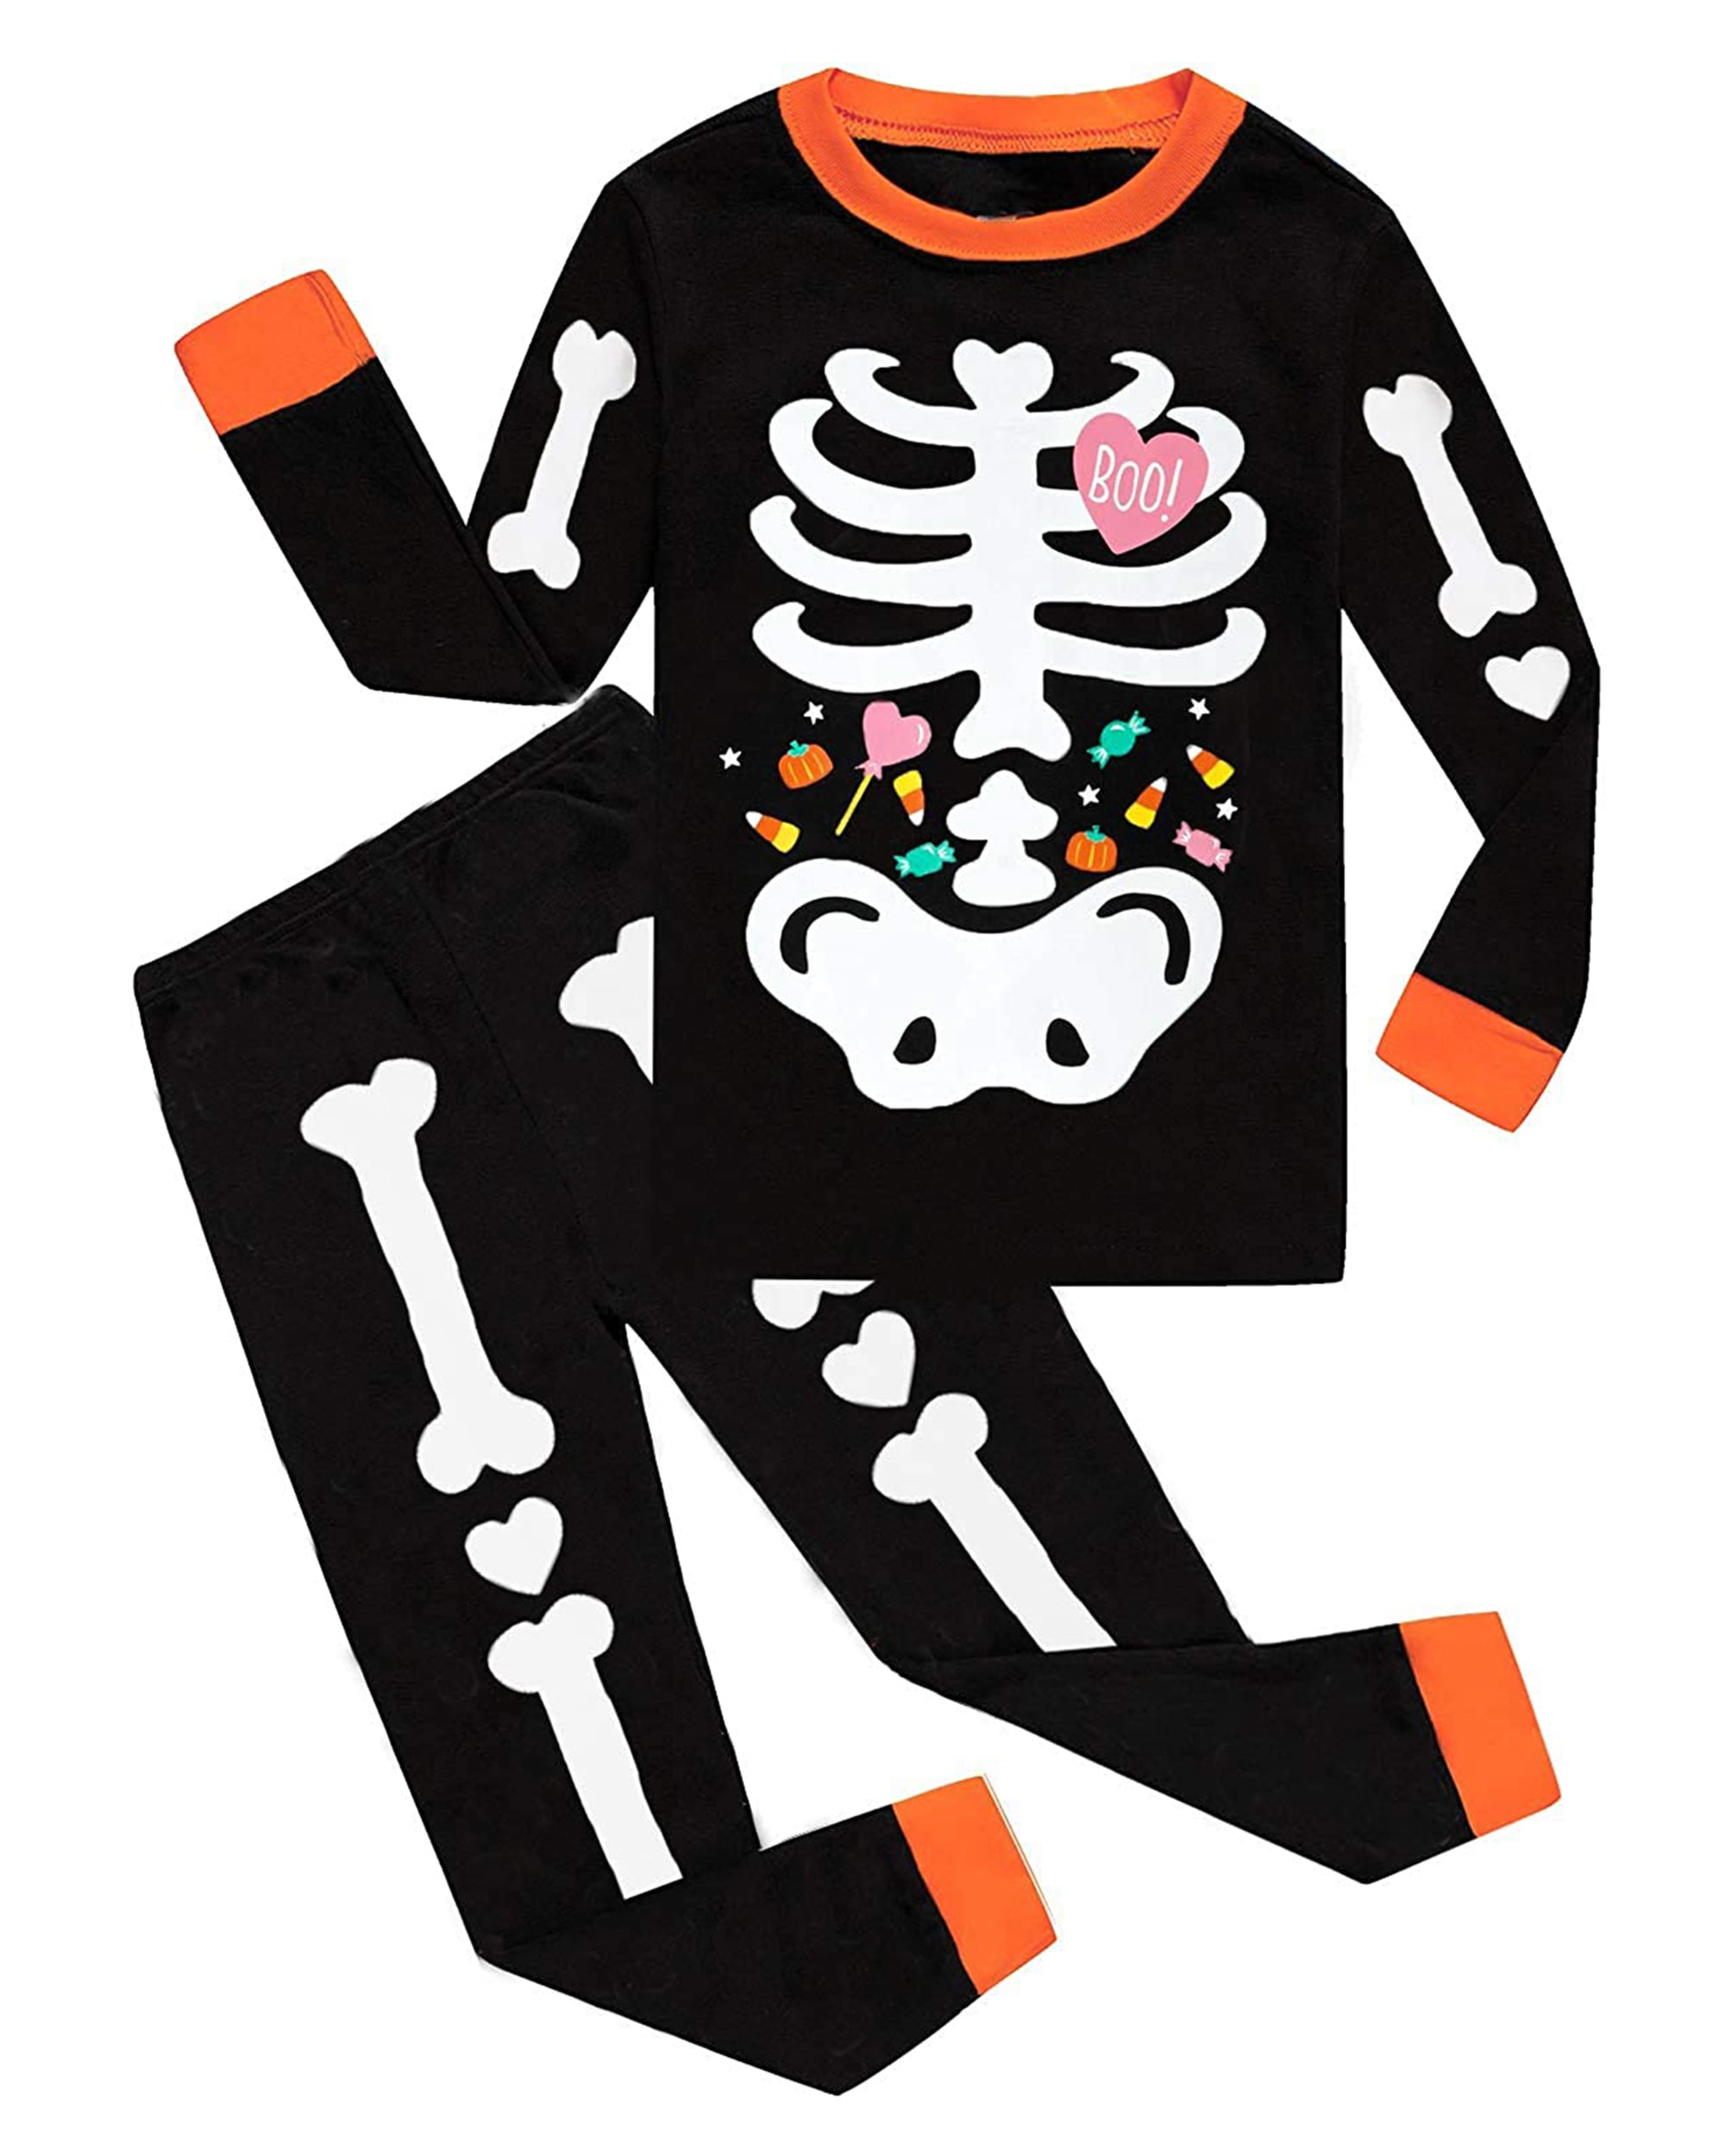 Boys Christmas Pajamas Halloween Skeleton-Glow-in-The-Dark Toddler Pjs Kids Clothes Shirts